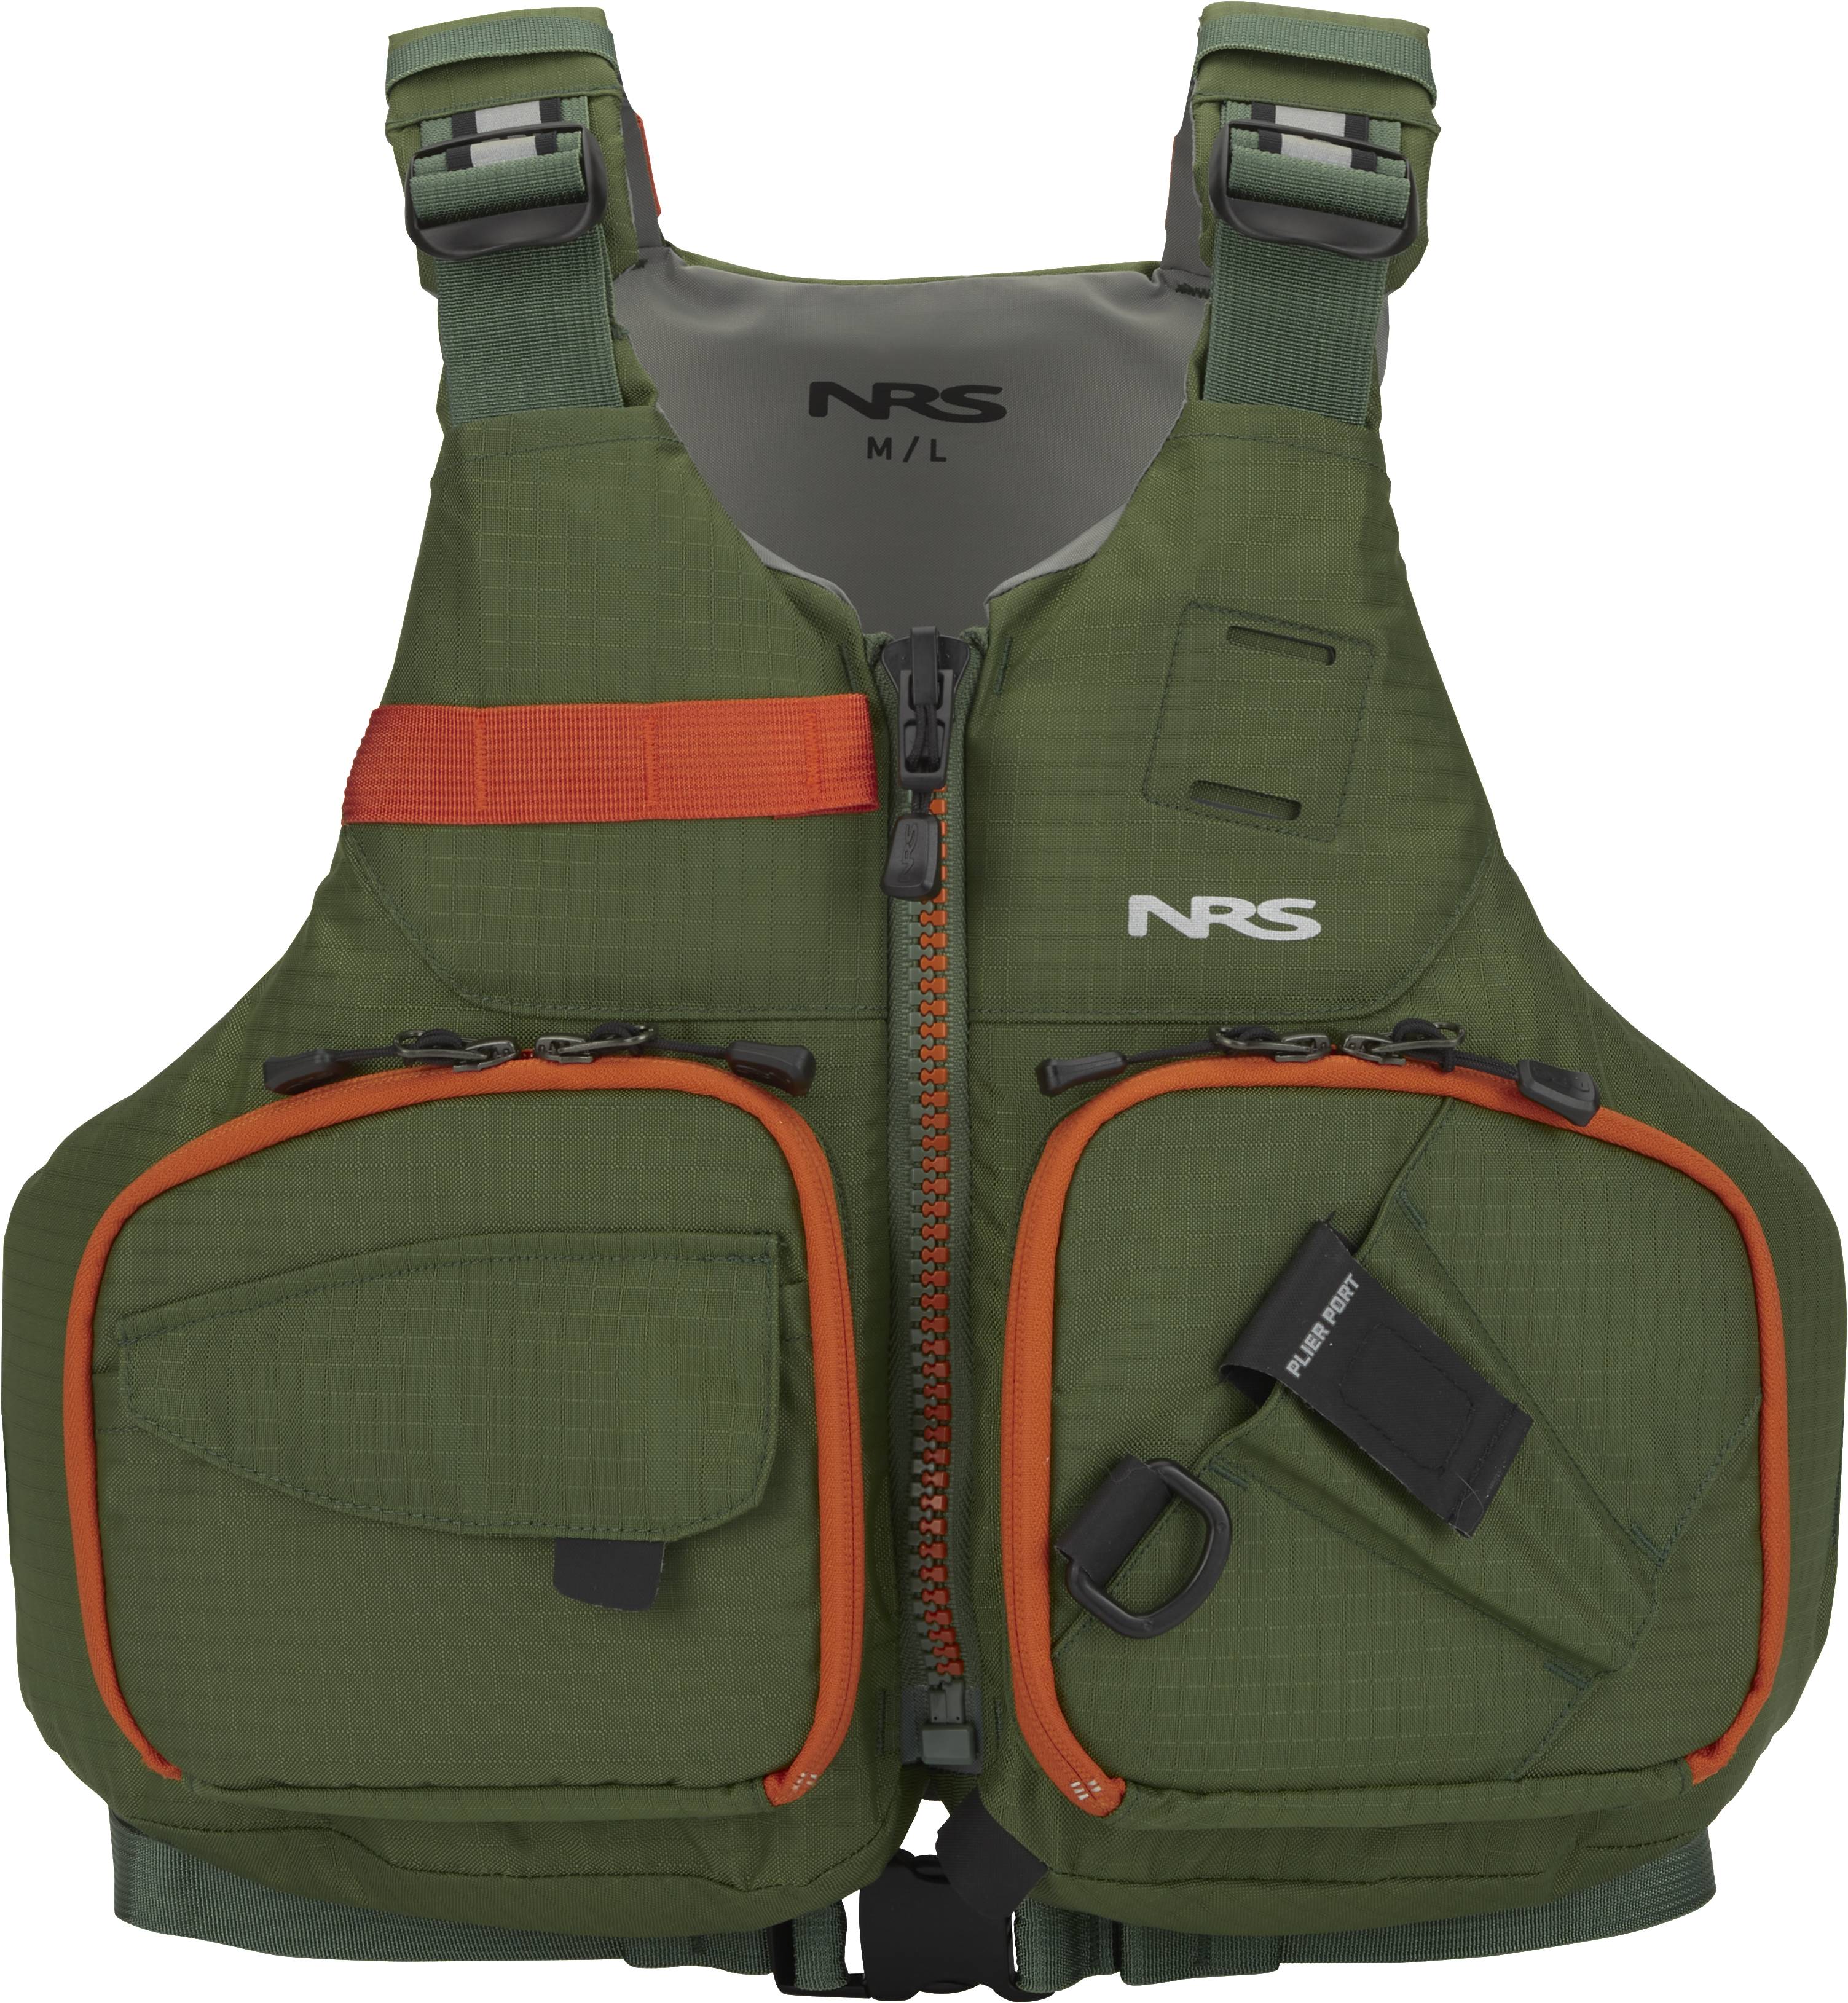 NRS, Zander PFD [Kayak Angler Buyer's Guide]